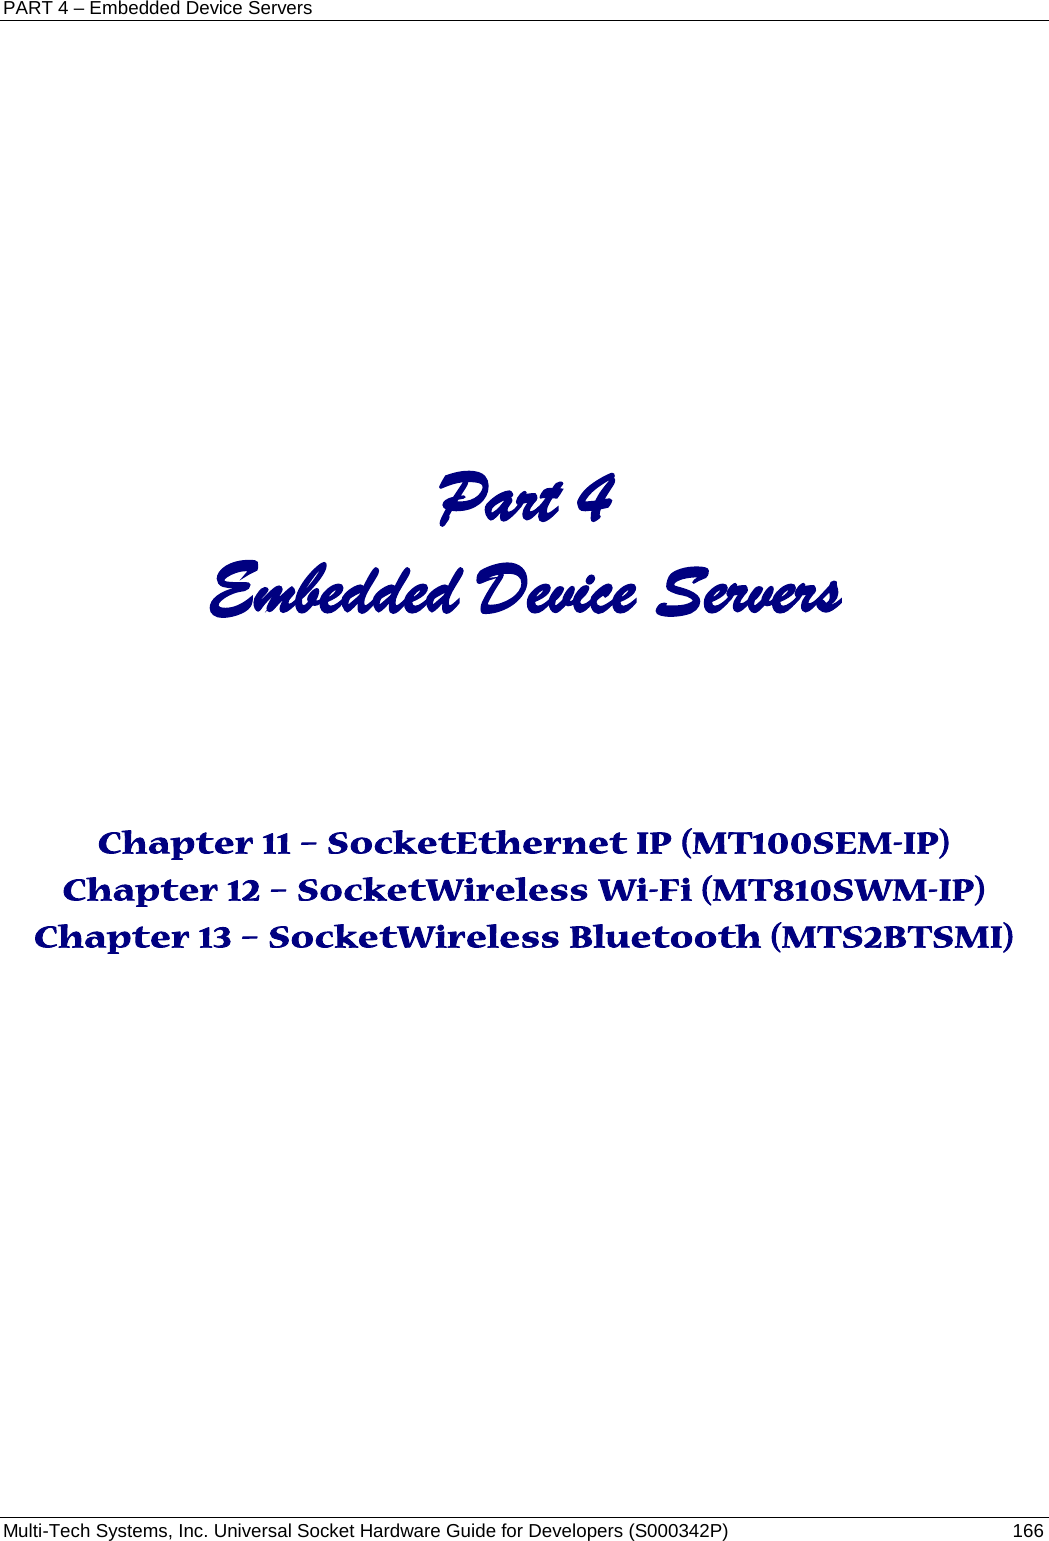 PART 4 – Embedded Device Servers Multi-Tech Systems, Inc. Universal Socket Hardware Guide for Developers (S000342P)  166               Part 4 Embedded Device Servers    Chapter 11 – SocketEthernet IP (MT100SEM-IP) Chapter 12 – SocketWireless Wi-Fi (MT810SWM-IP) Chapter 13 – SocketWireless Bluetooth (MTS2BTSMI)    